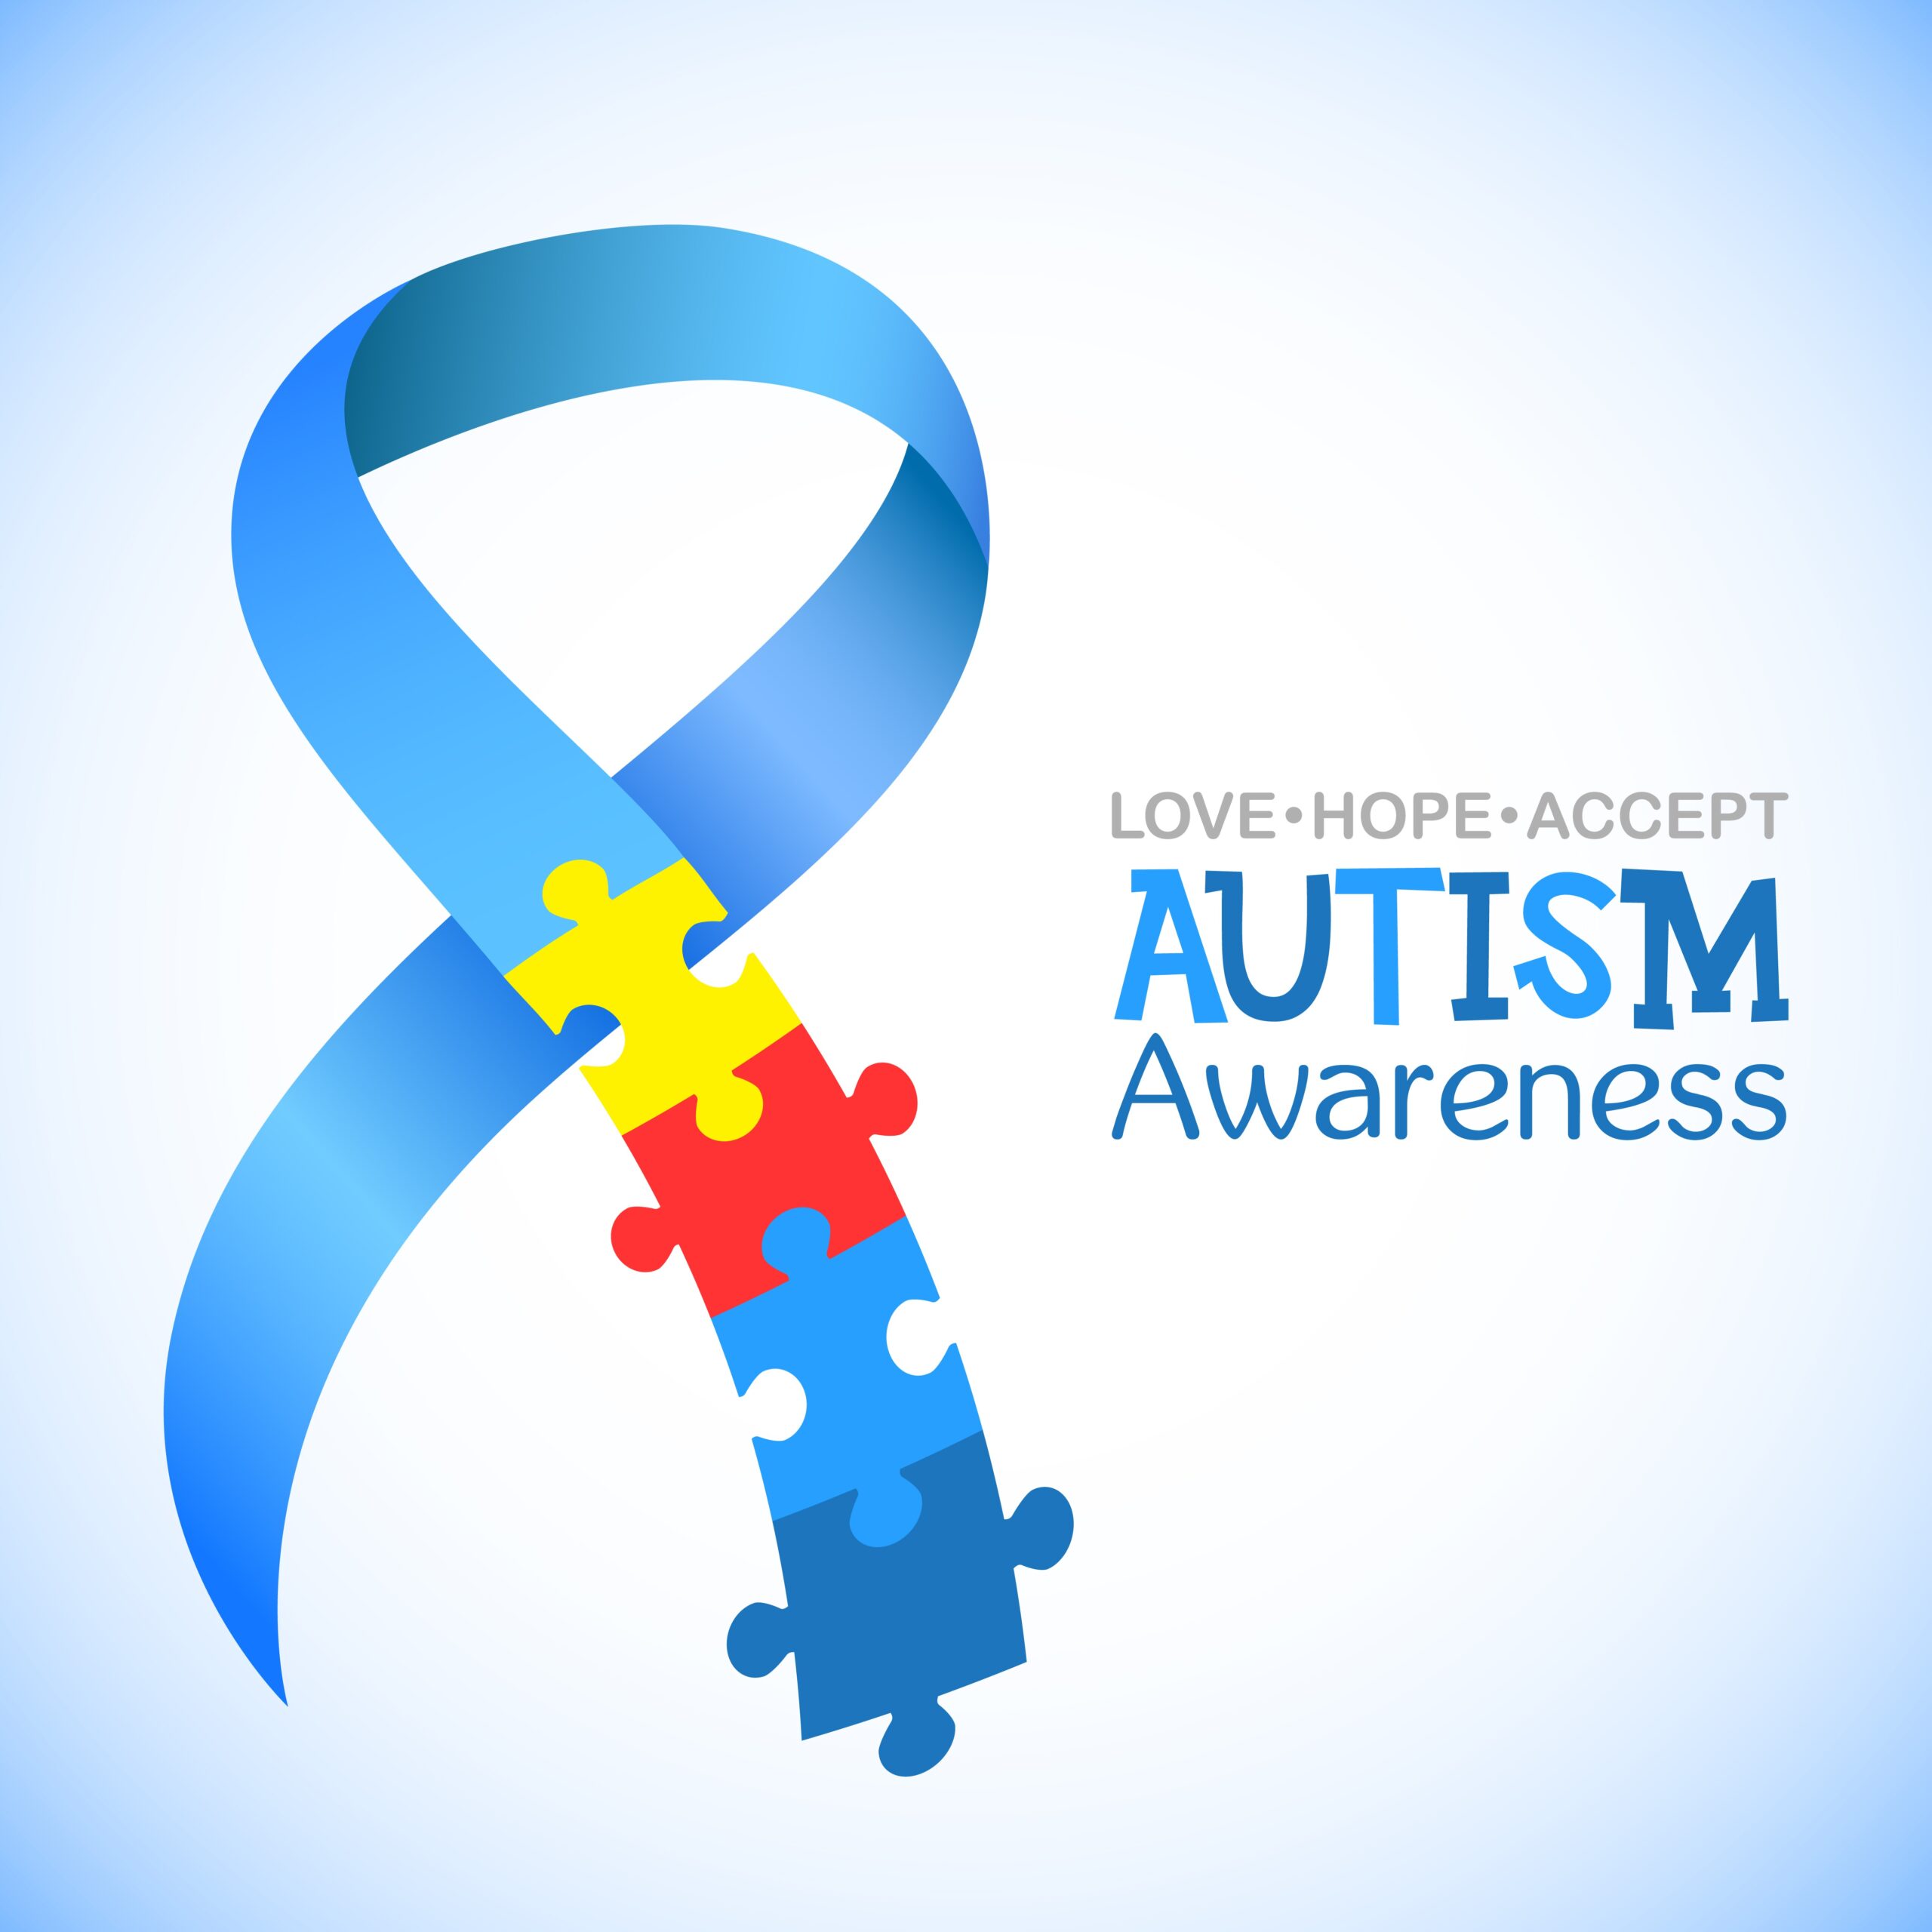 hope-trust-light-it-up-blue-april-is-autism-awareness-month-hope-trust